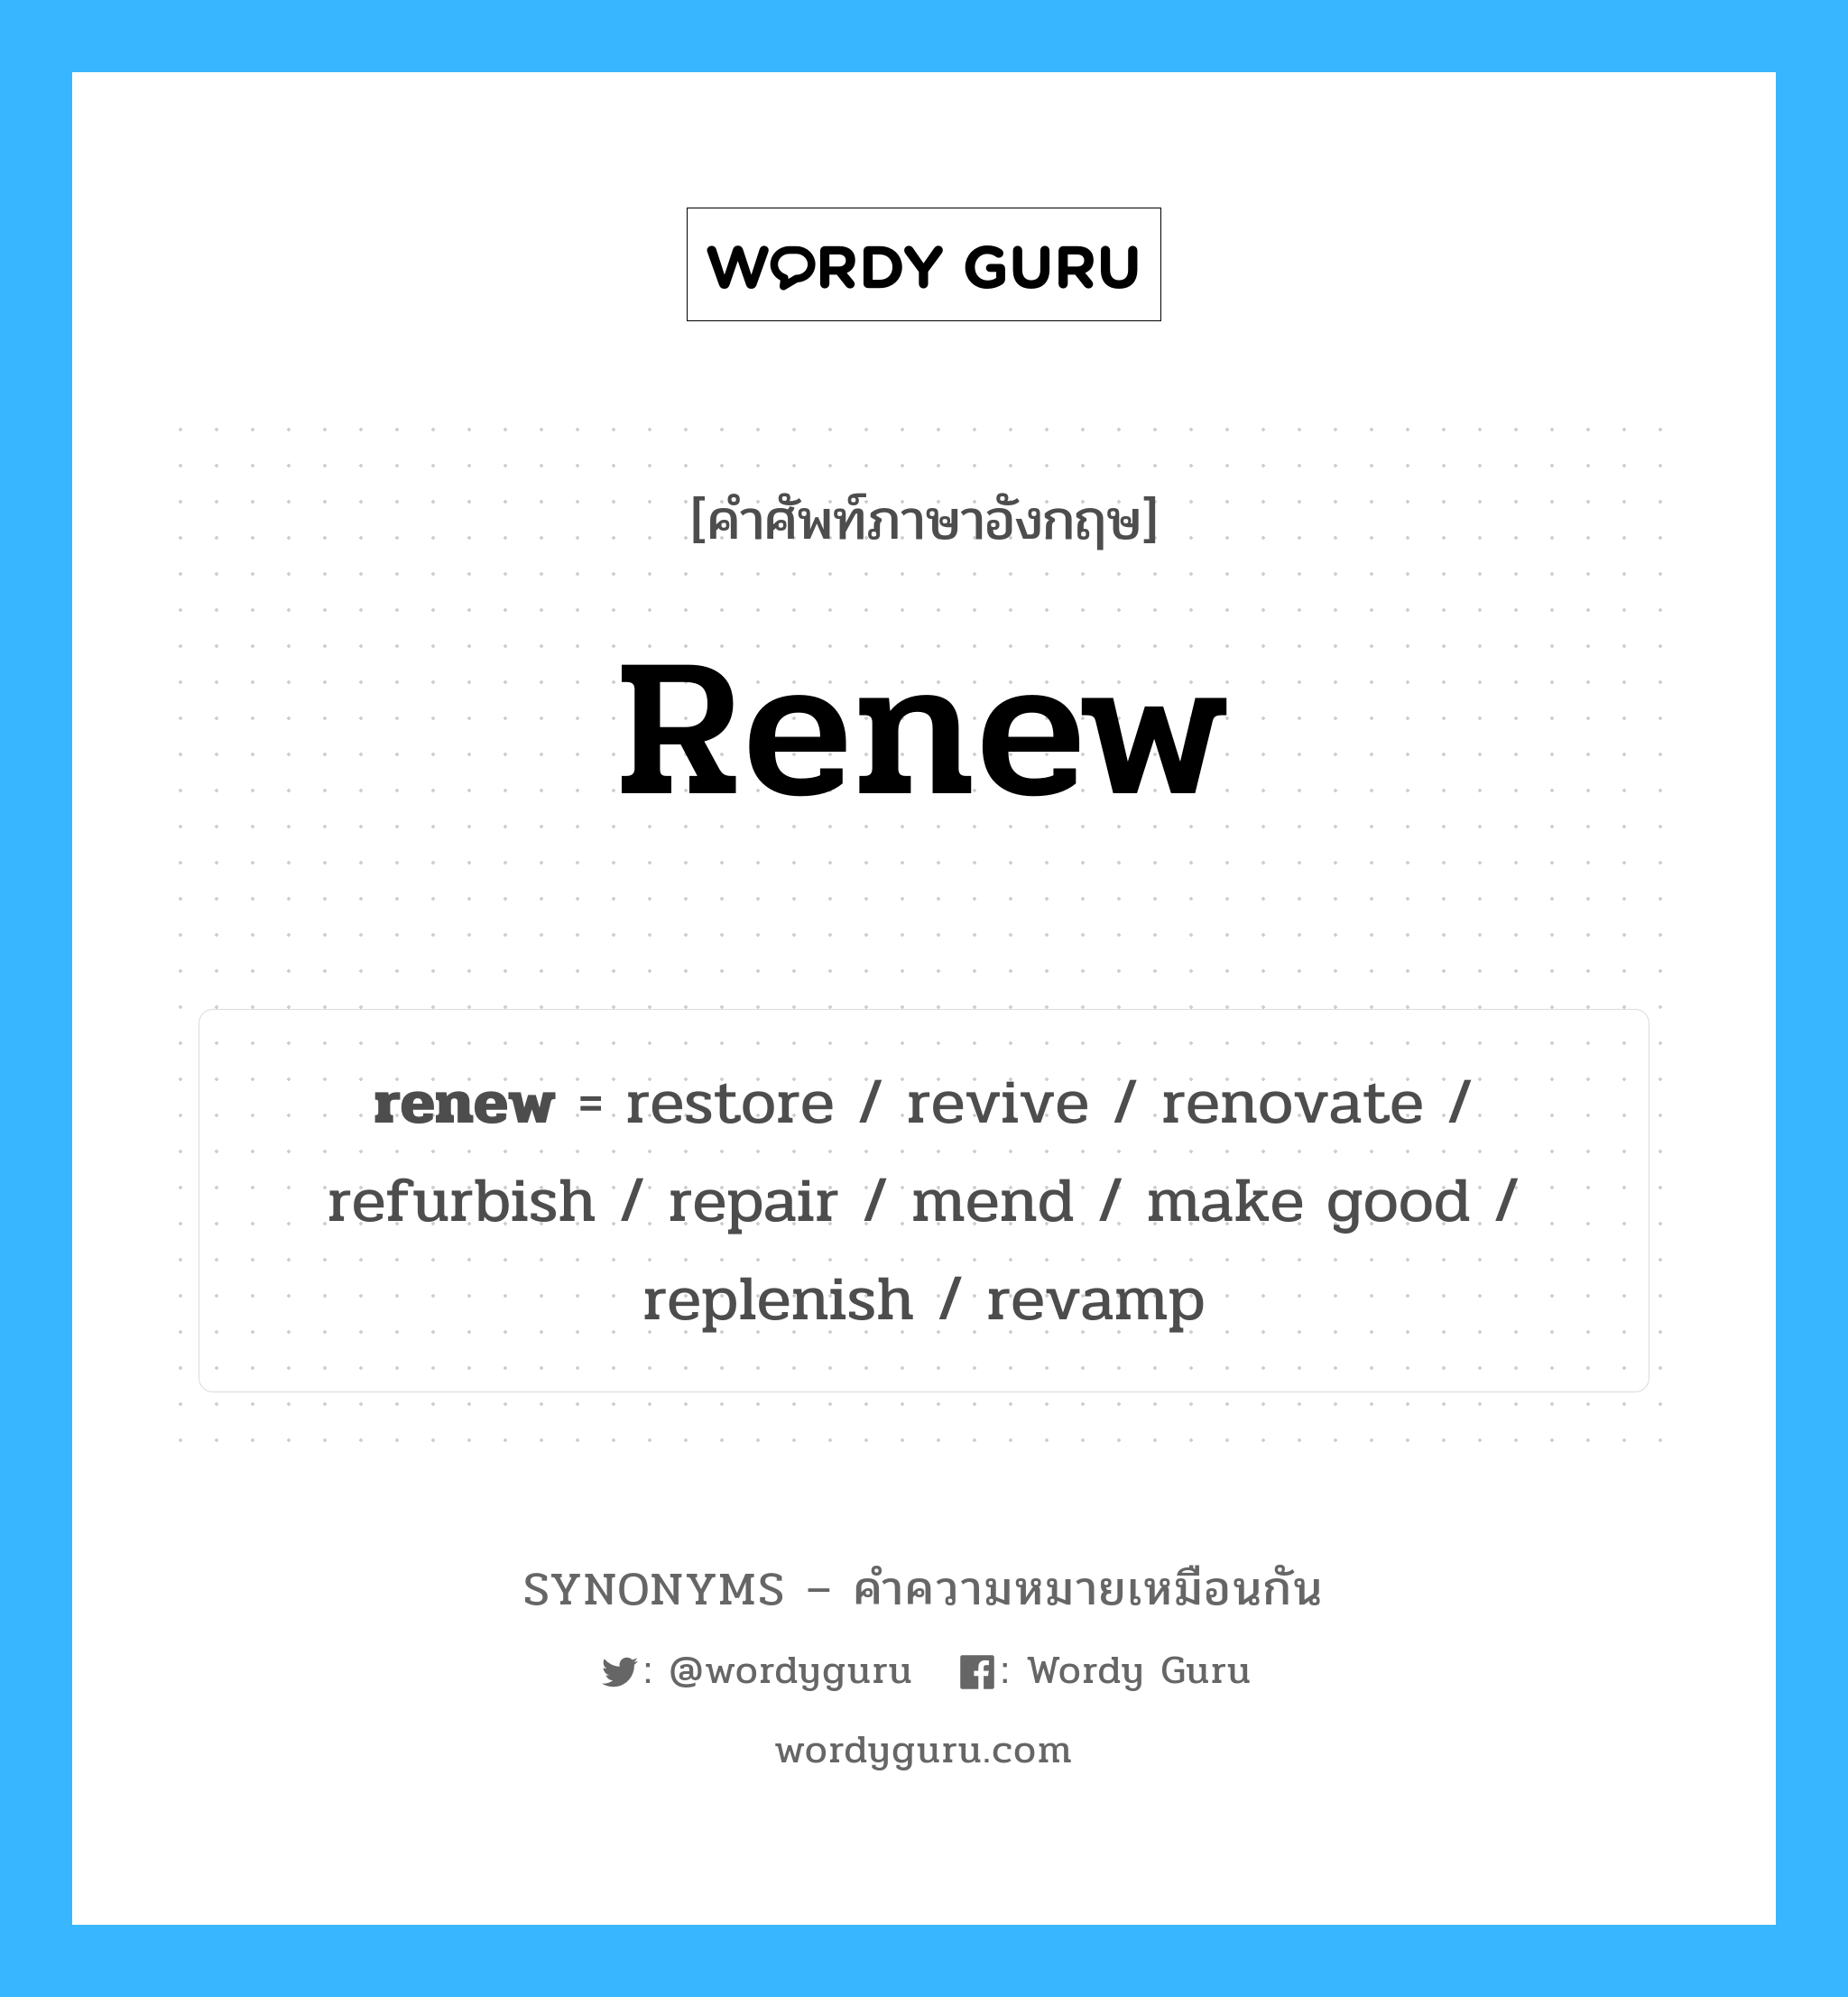 replenish เป็นหนึ่งใน renew และมีคำอื่น ๆ อีกดังนี้, คำศัพท์ภาษาอังกฤษ replenish ความหมายคล้ายกันกับ renew แปลว่า เติมเต็ม หมวด renew